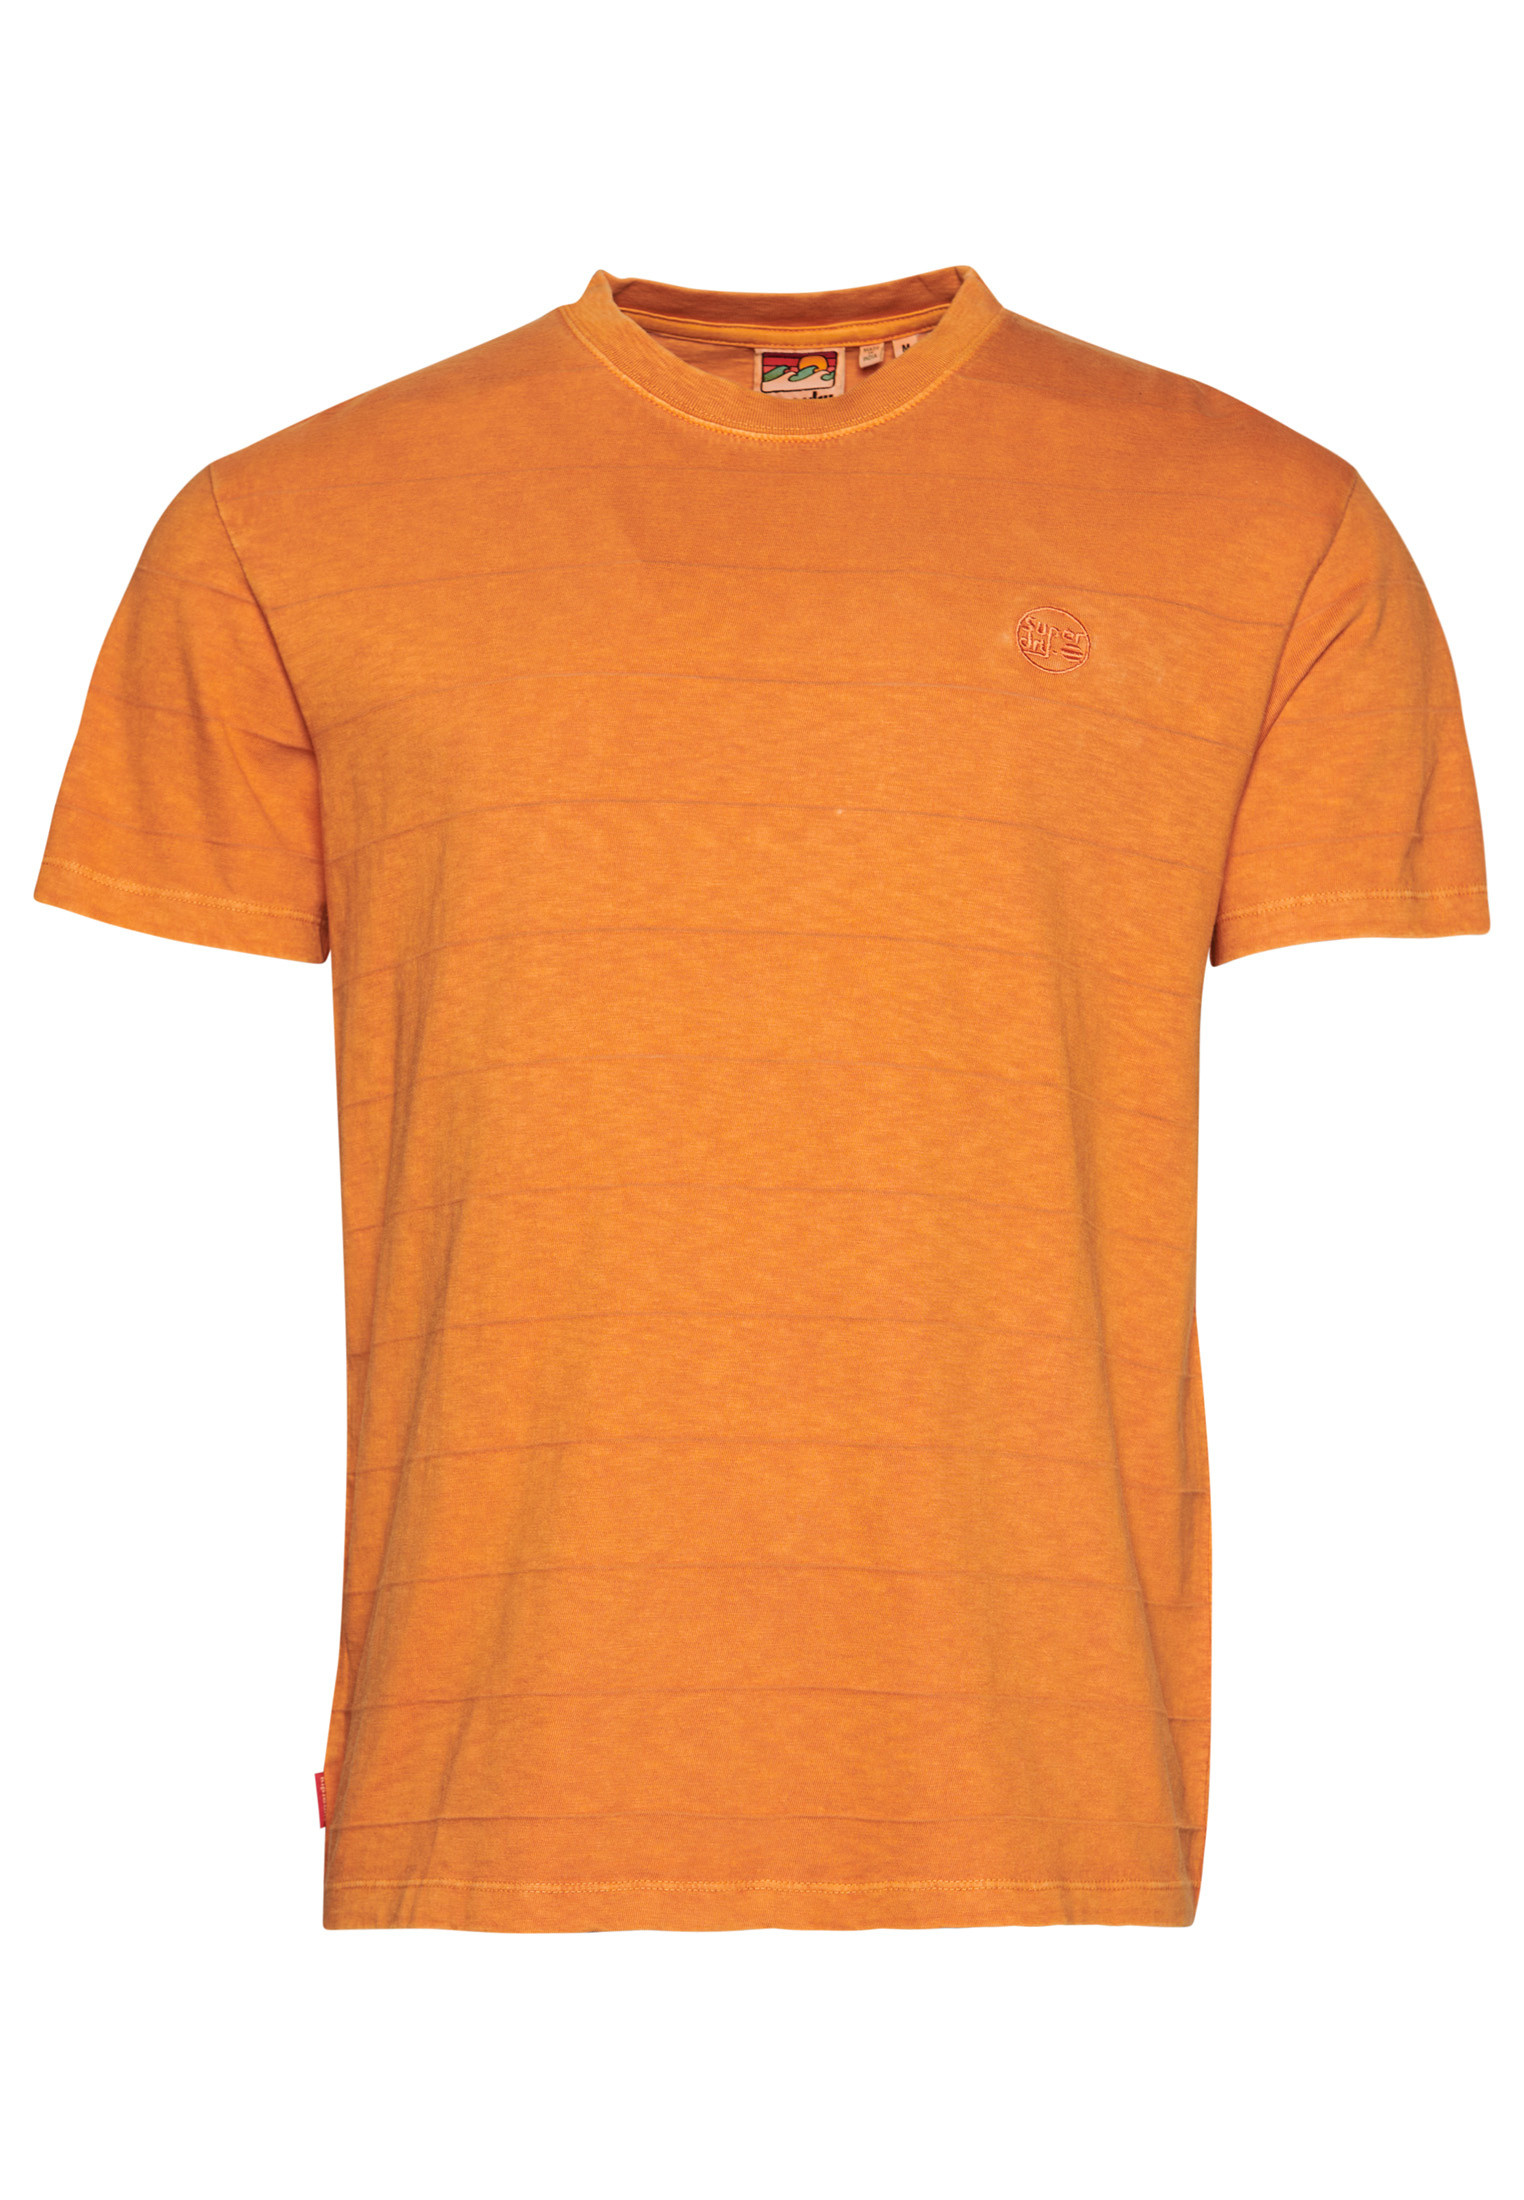 Superdry - T-shirt rigata effetto vintage, Arancione, large image number 0